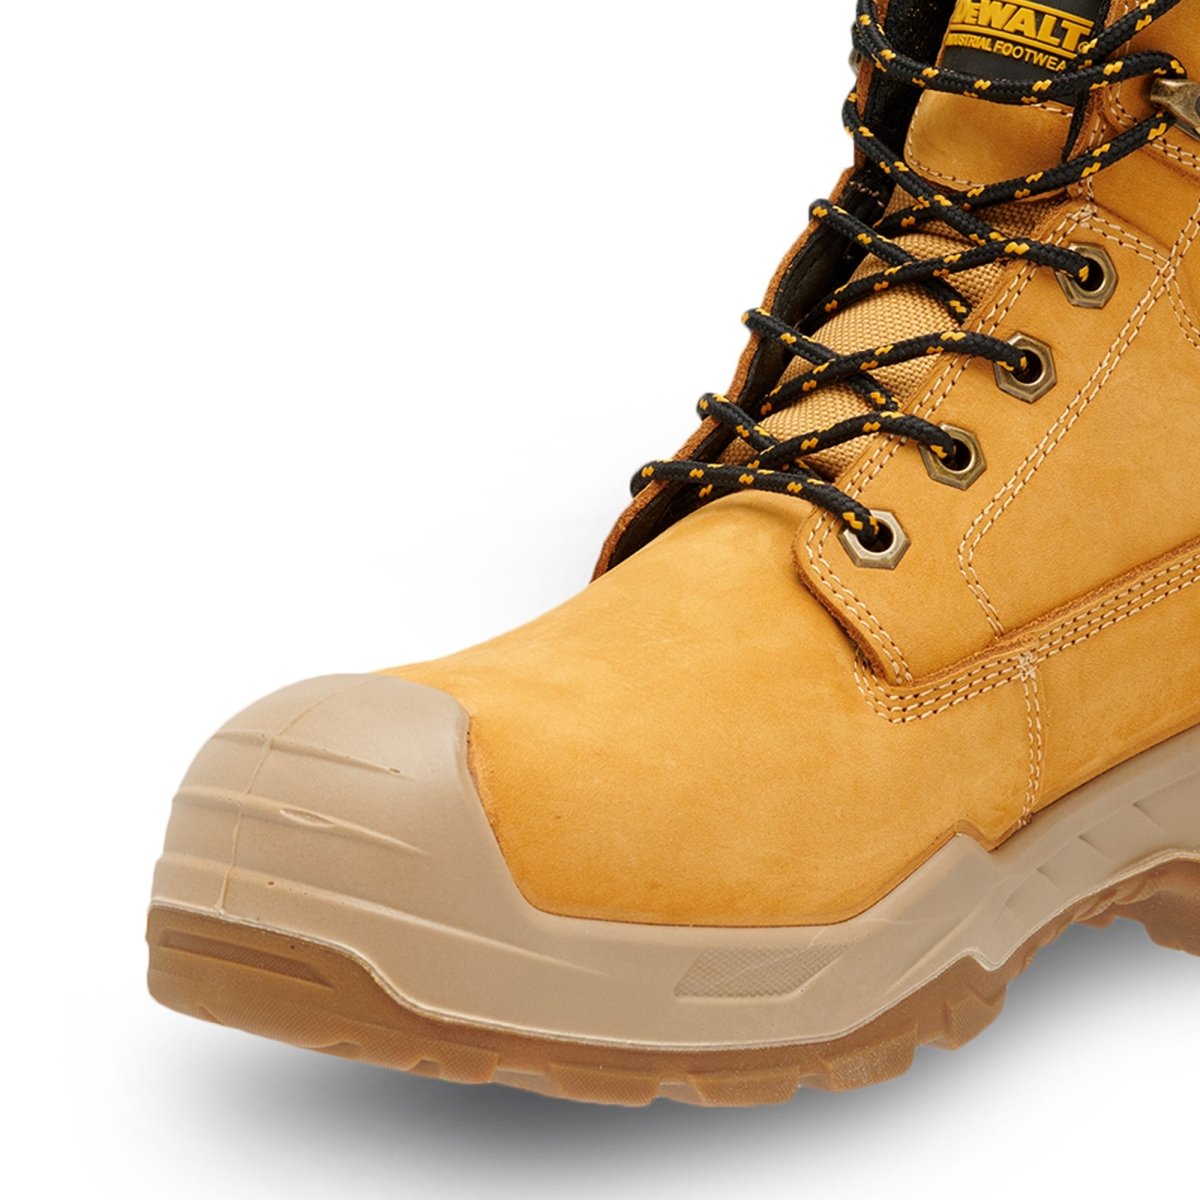 DeWalt Jamestown S3 Steel Toe Cap Safety Boots - Shoe Store Direct